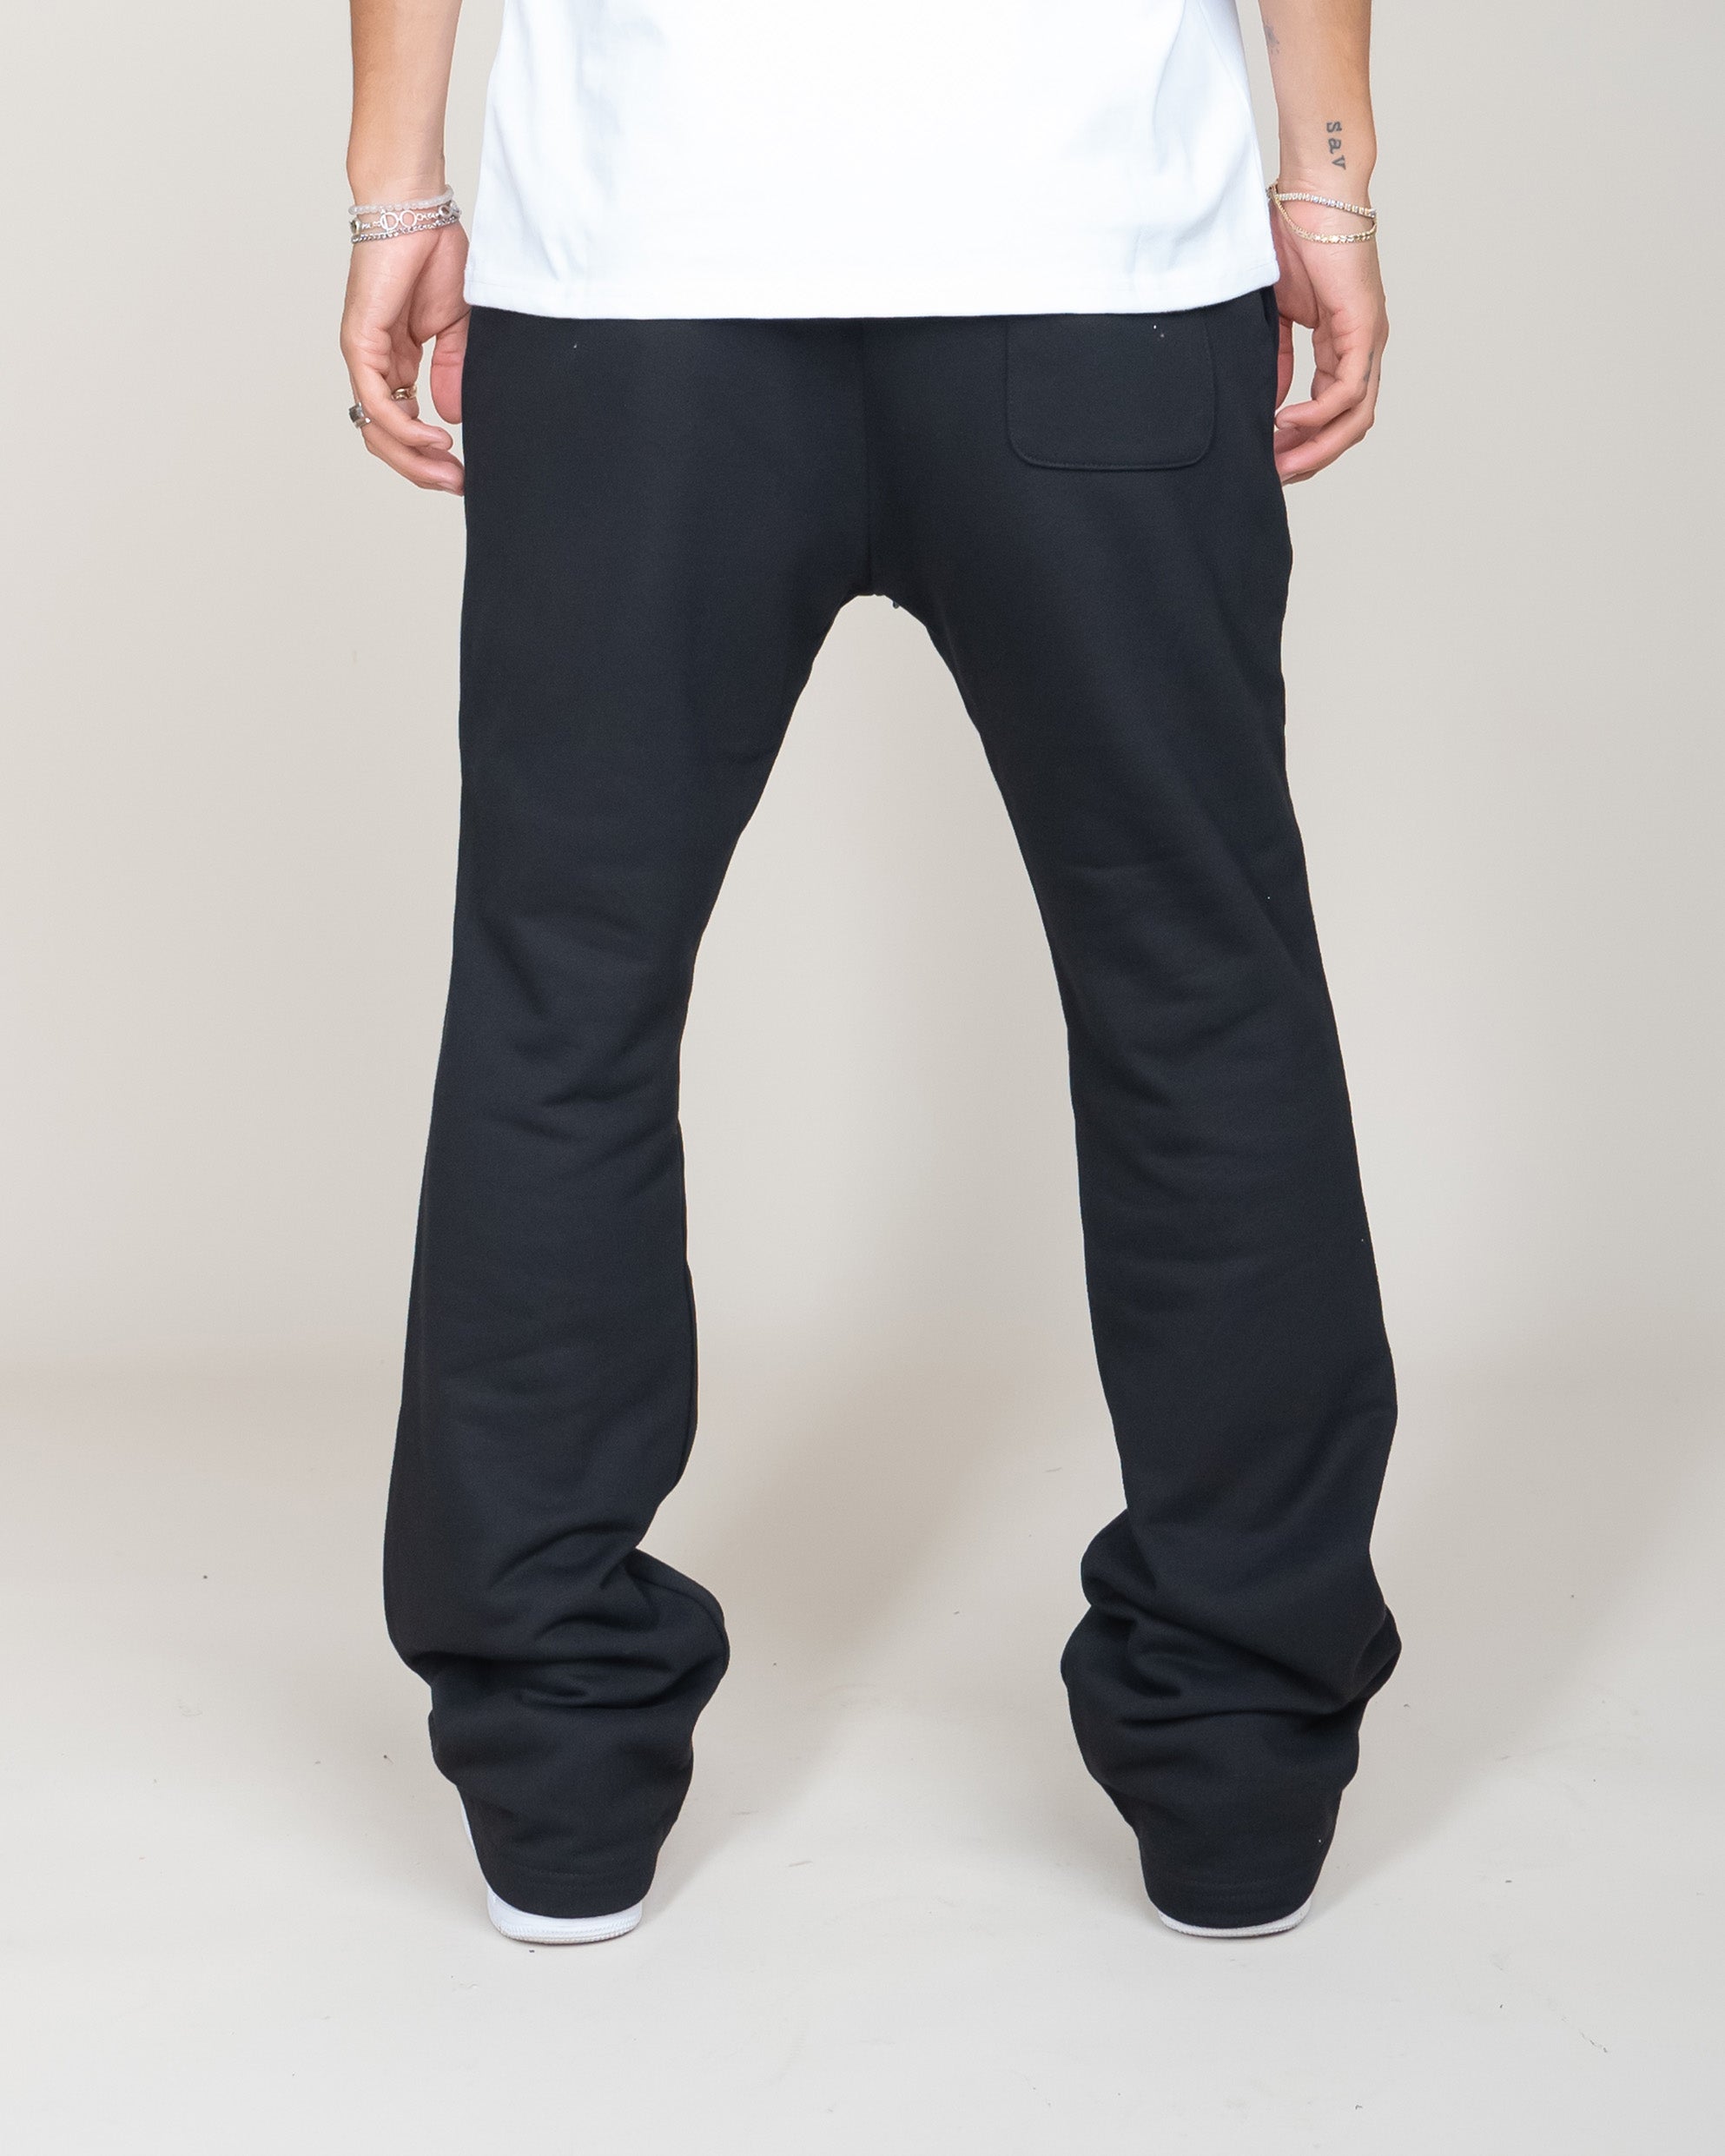 Gallery Dept. Flare Sweatpants ‘Washed Black’ XL